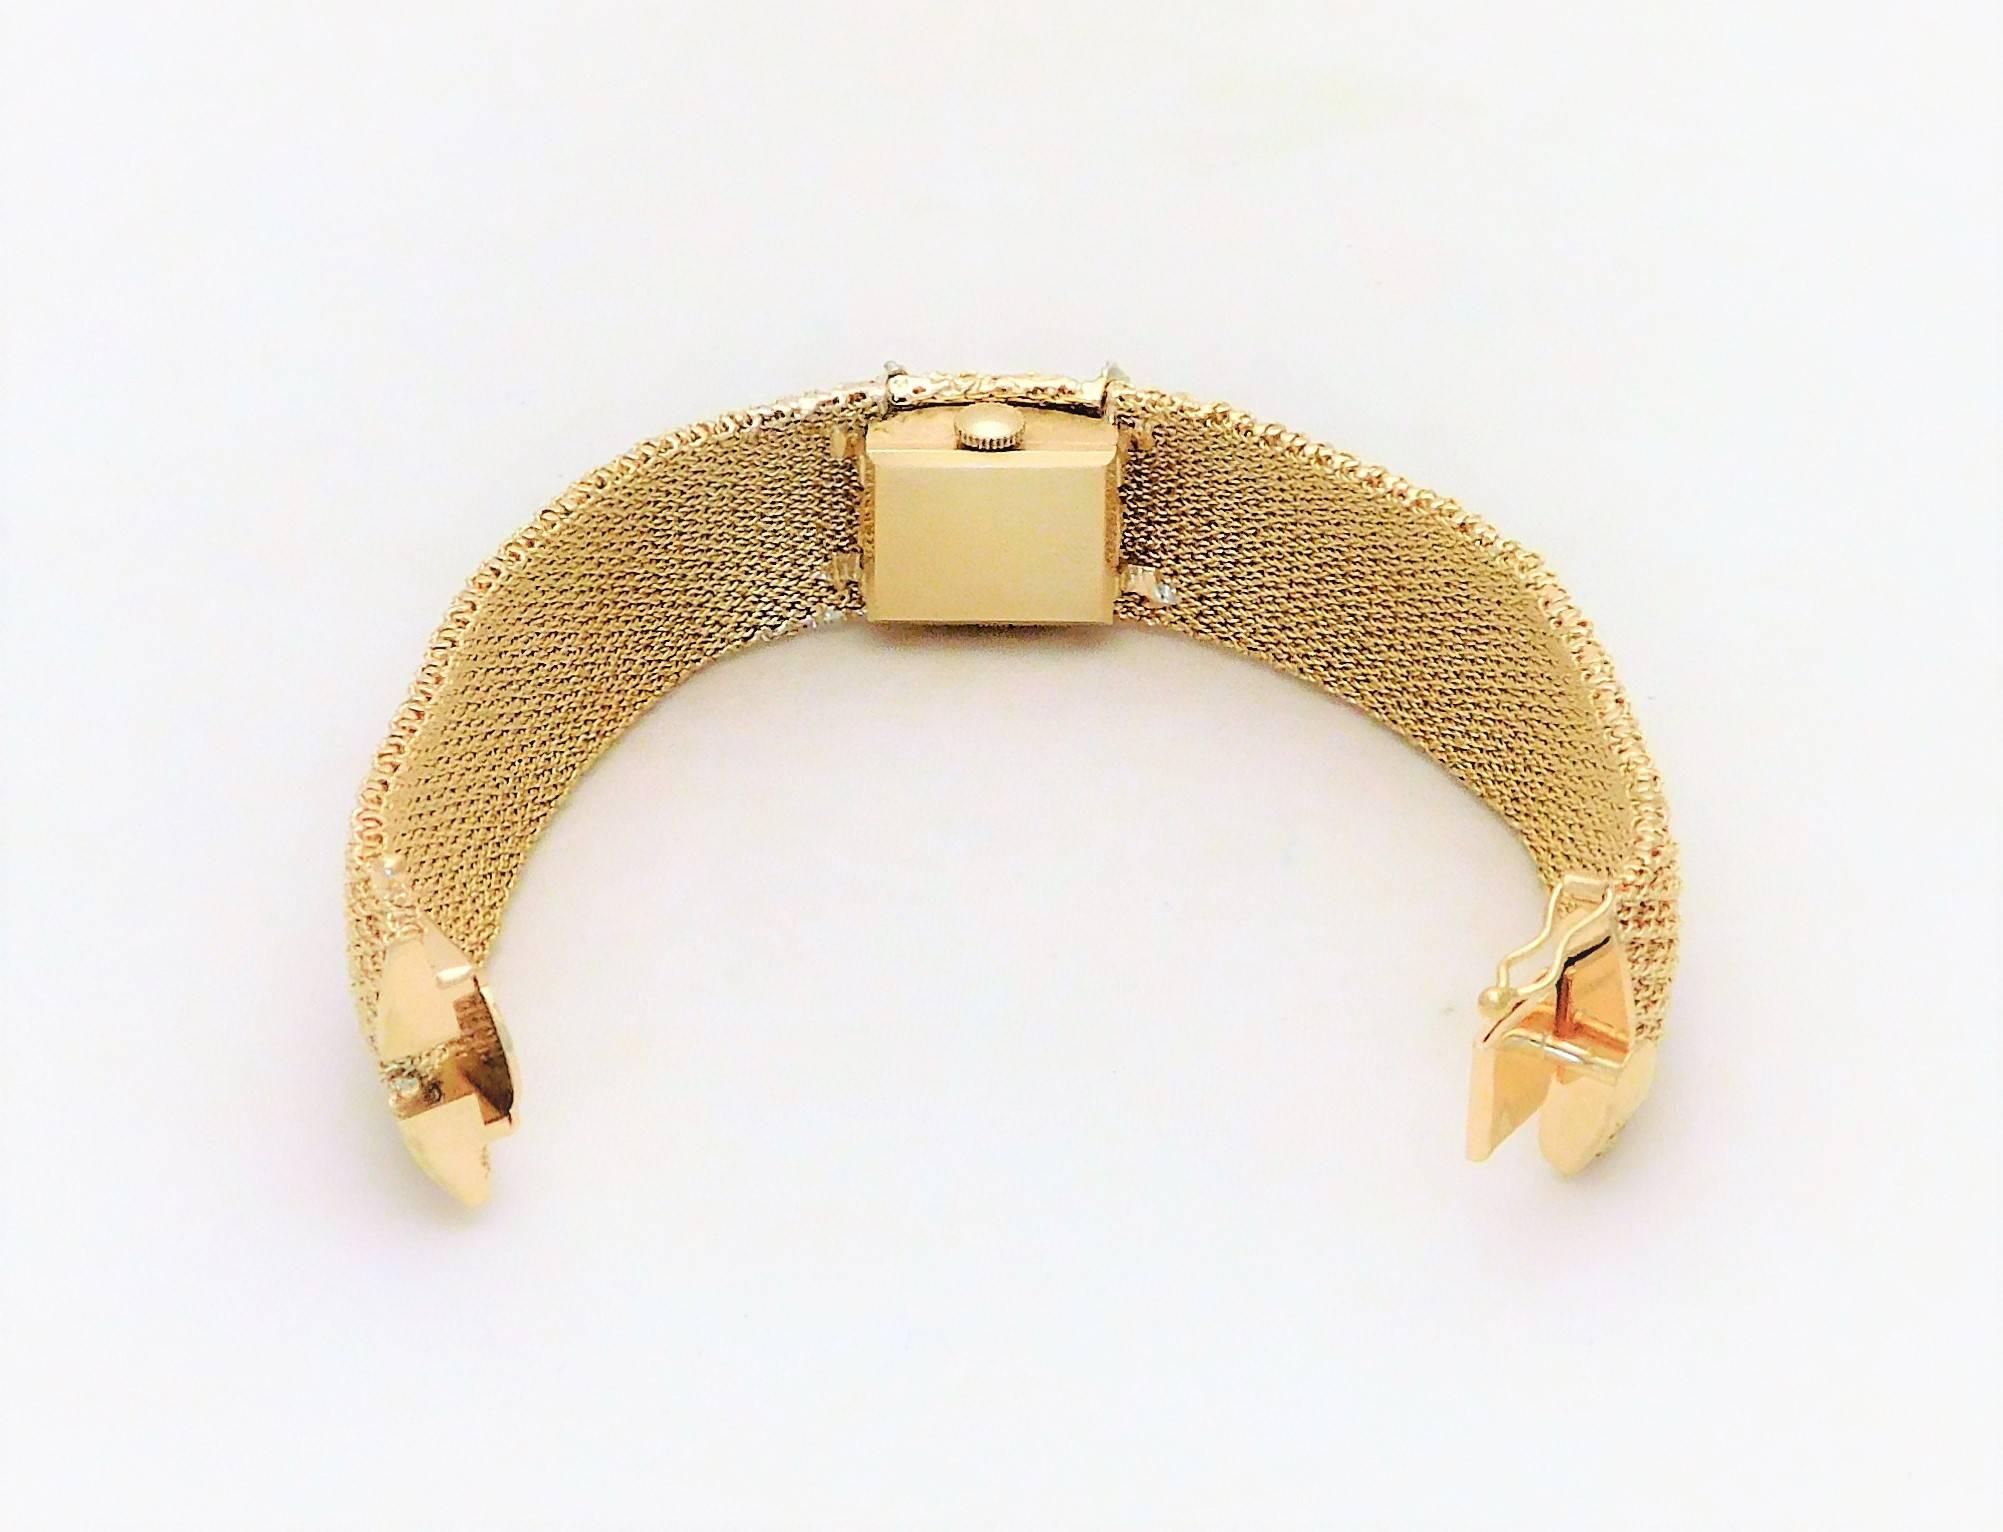 Round Cut Hamilton Ladies Yellow Gold Diamond “Peek-a-boo” Manual Wristwatch, circa 1955 For Sale